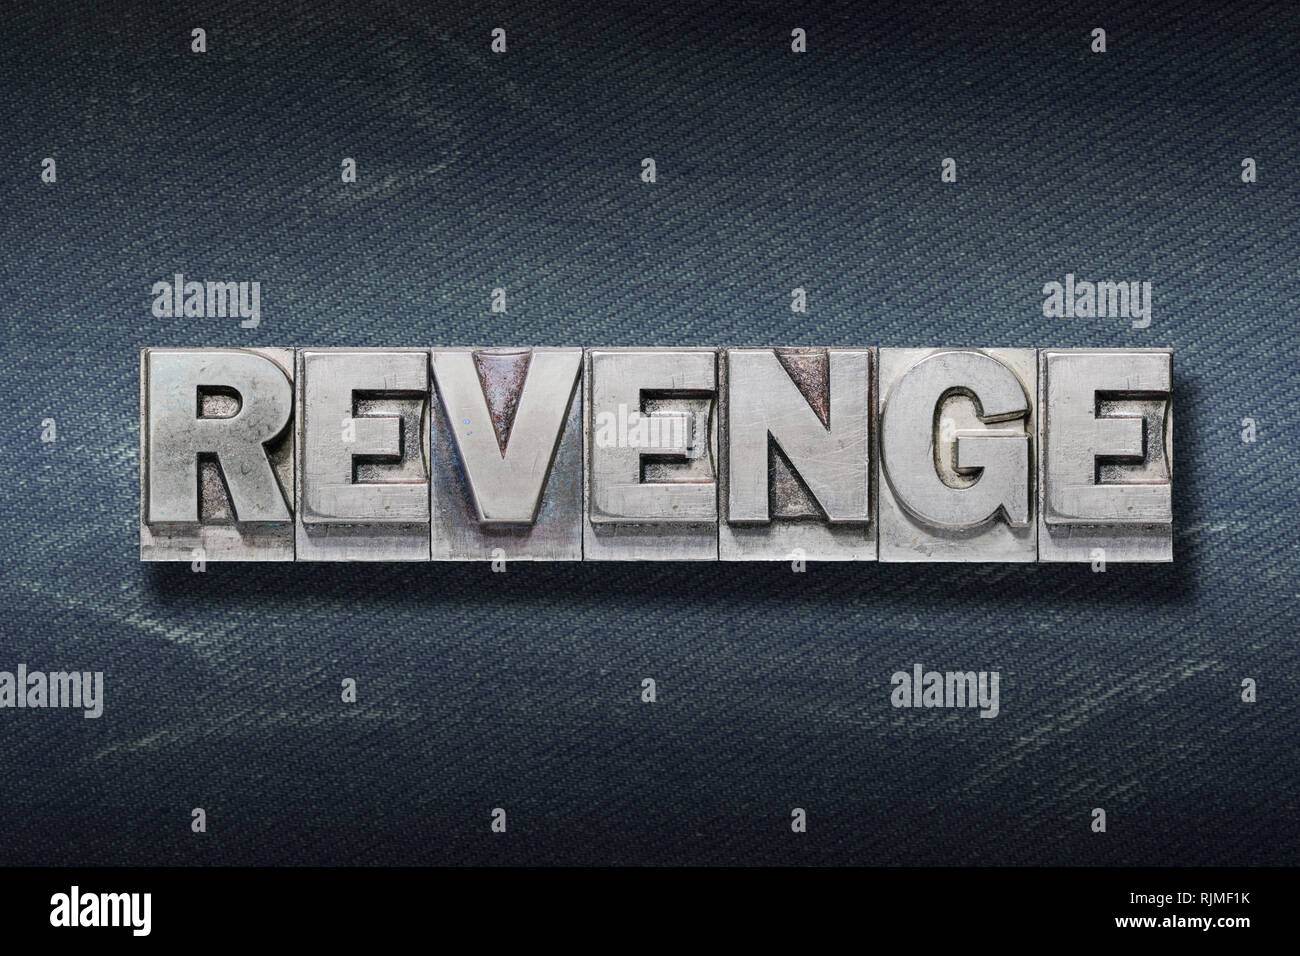 revenge word made from metallic letterpress on dark jeans background Stock Photo